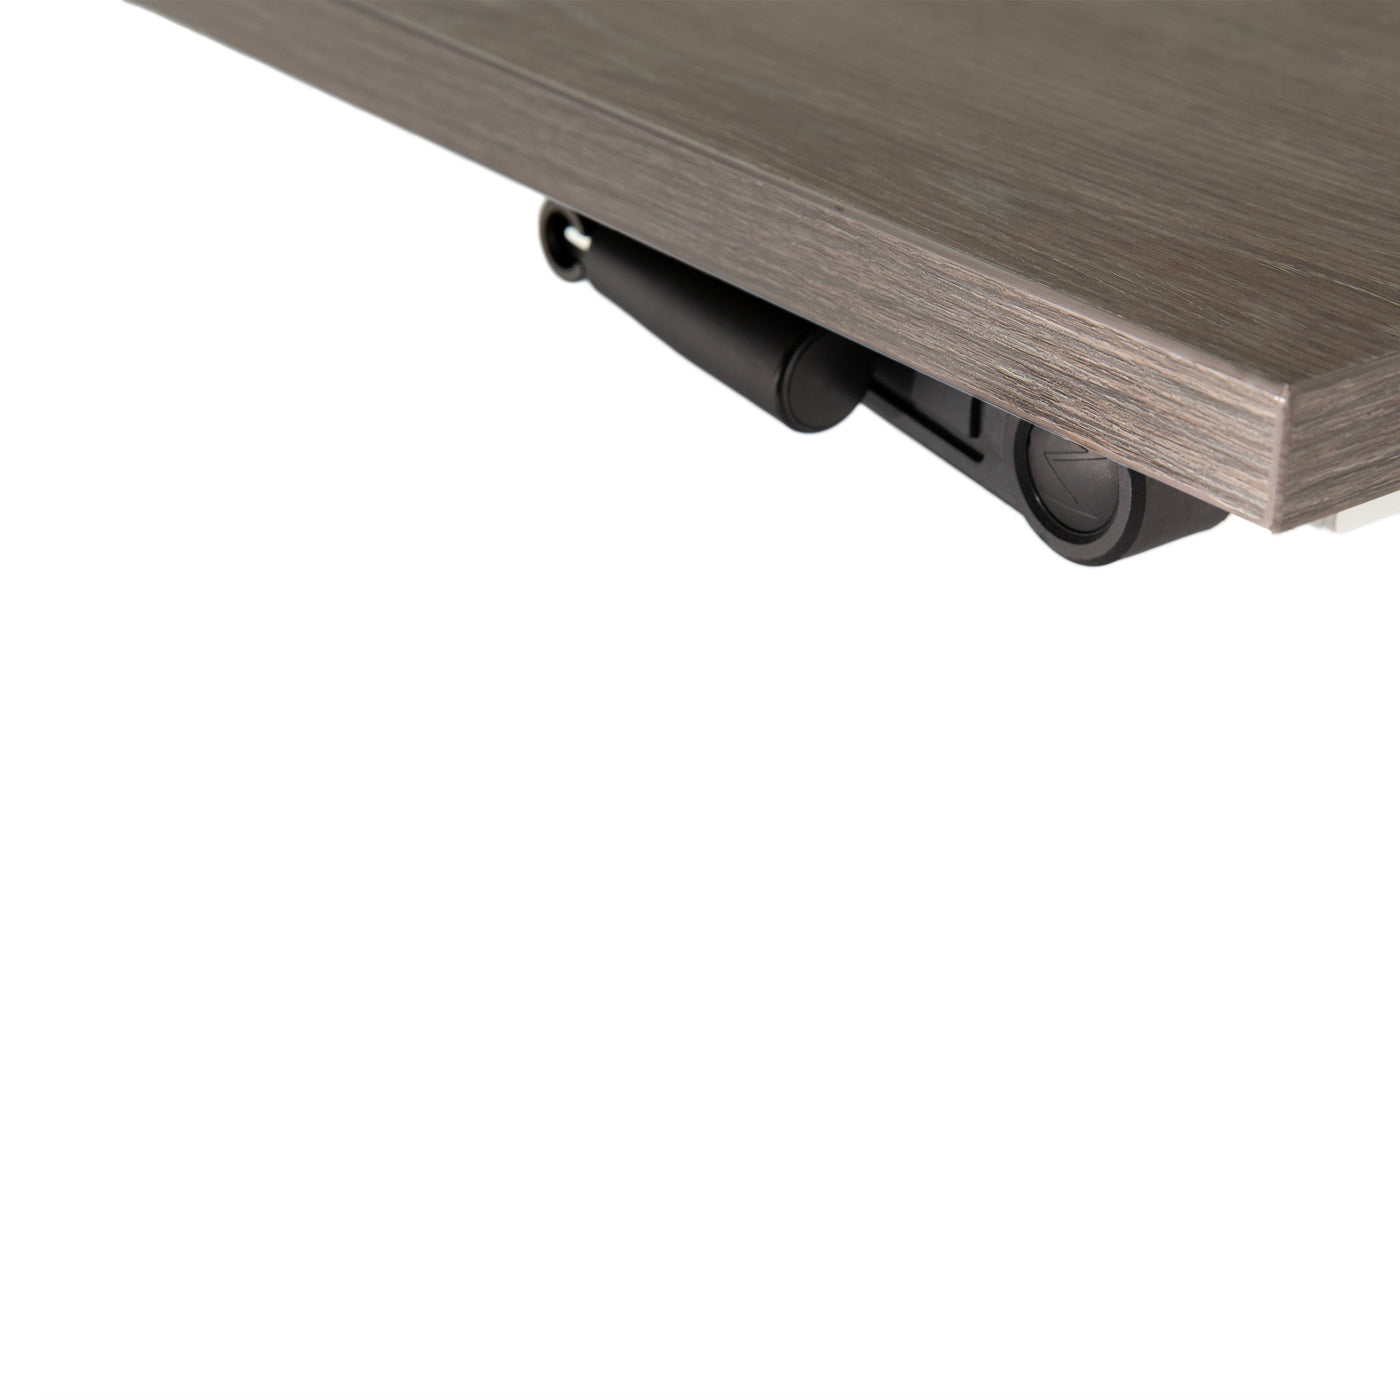 Gravity crank-adjustable sit-stand desk